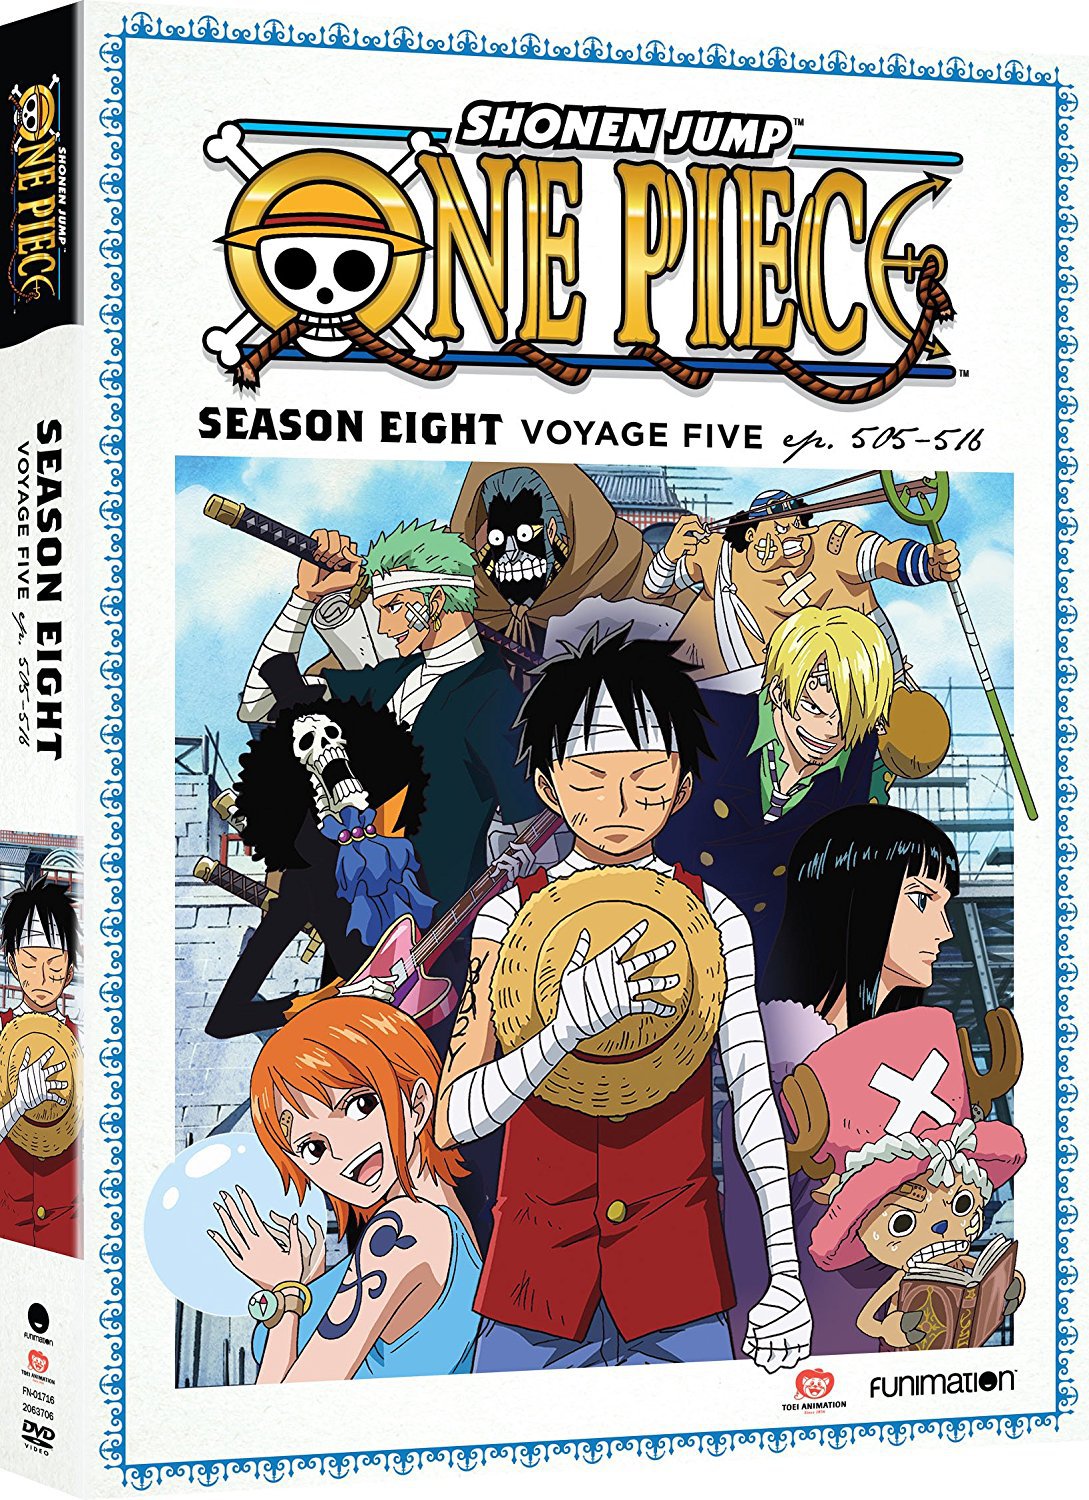 One Piece Season 8 Voyage 5